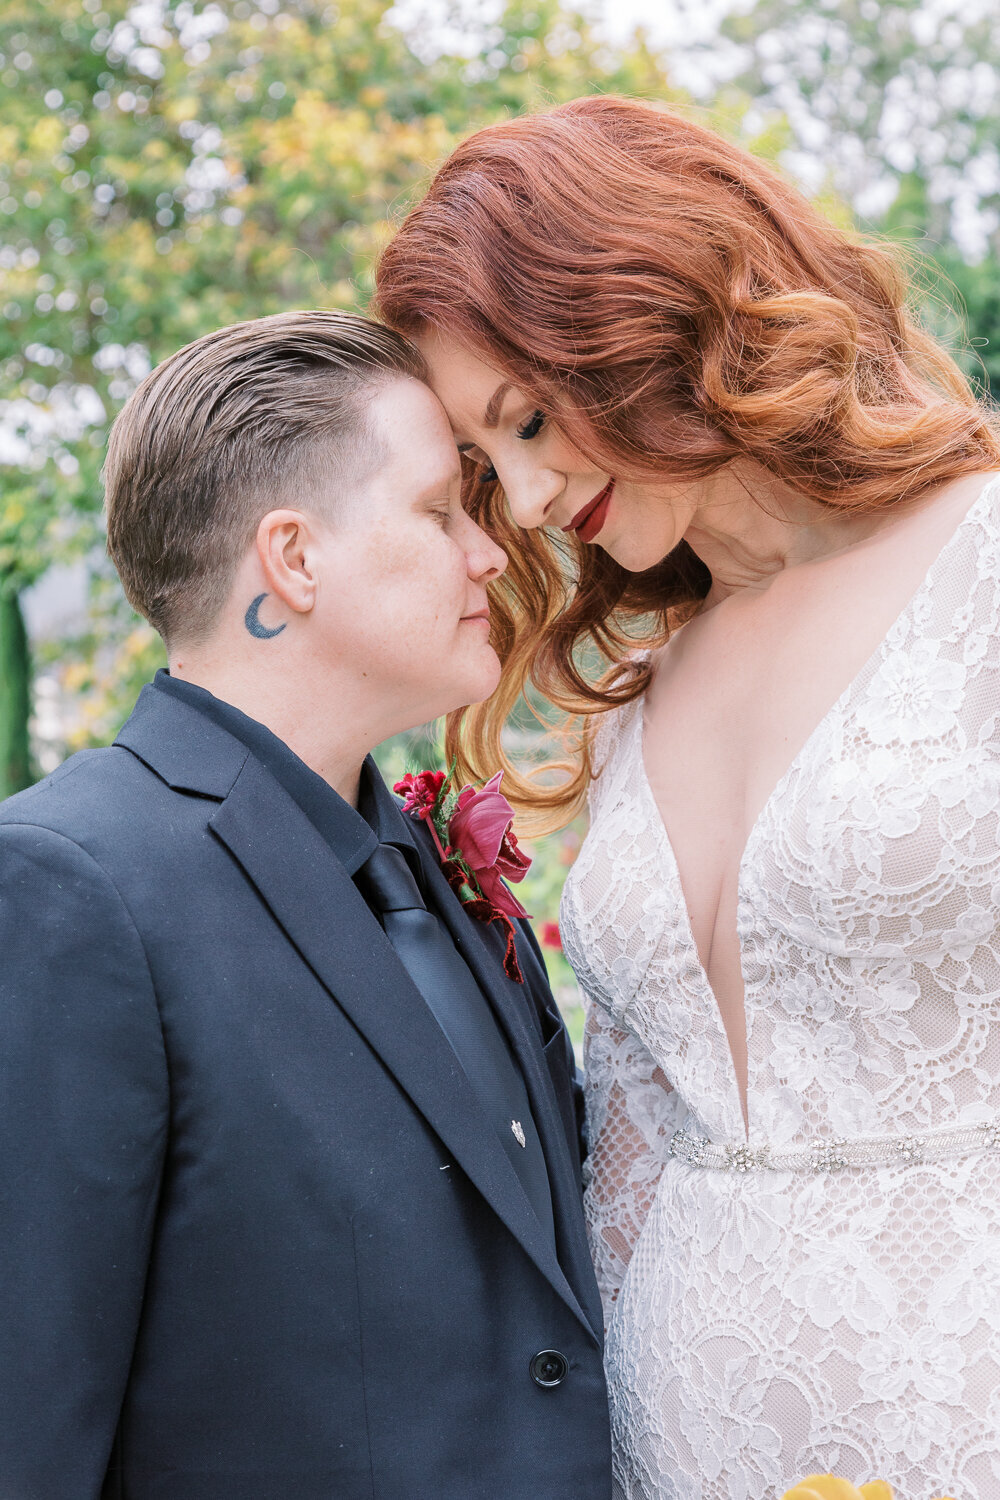 Romantic LGBT Wedding Photography